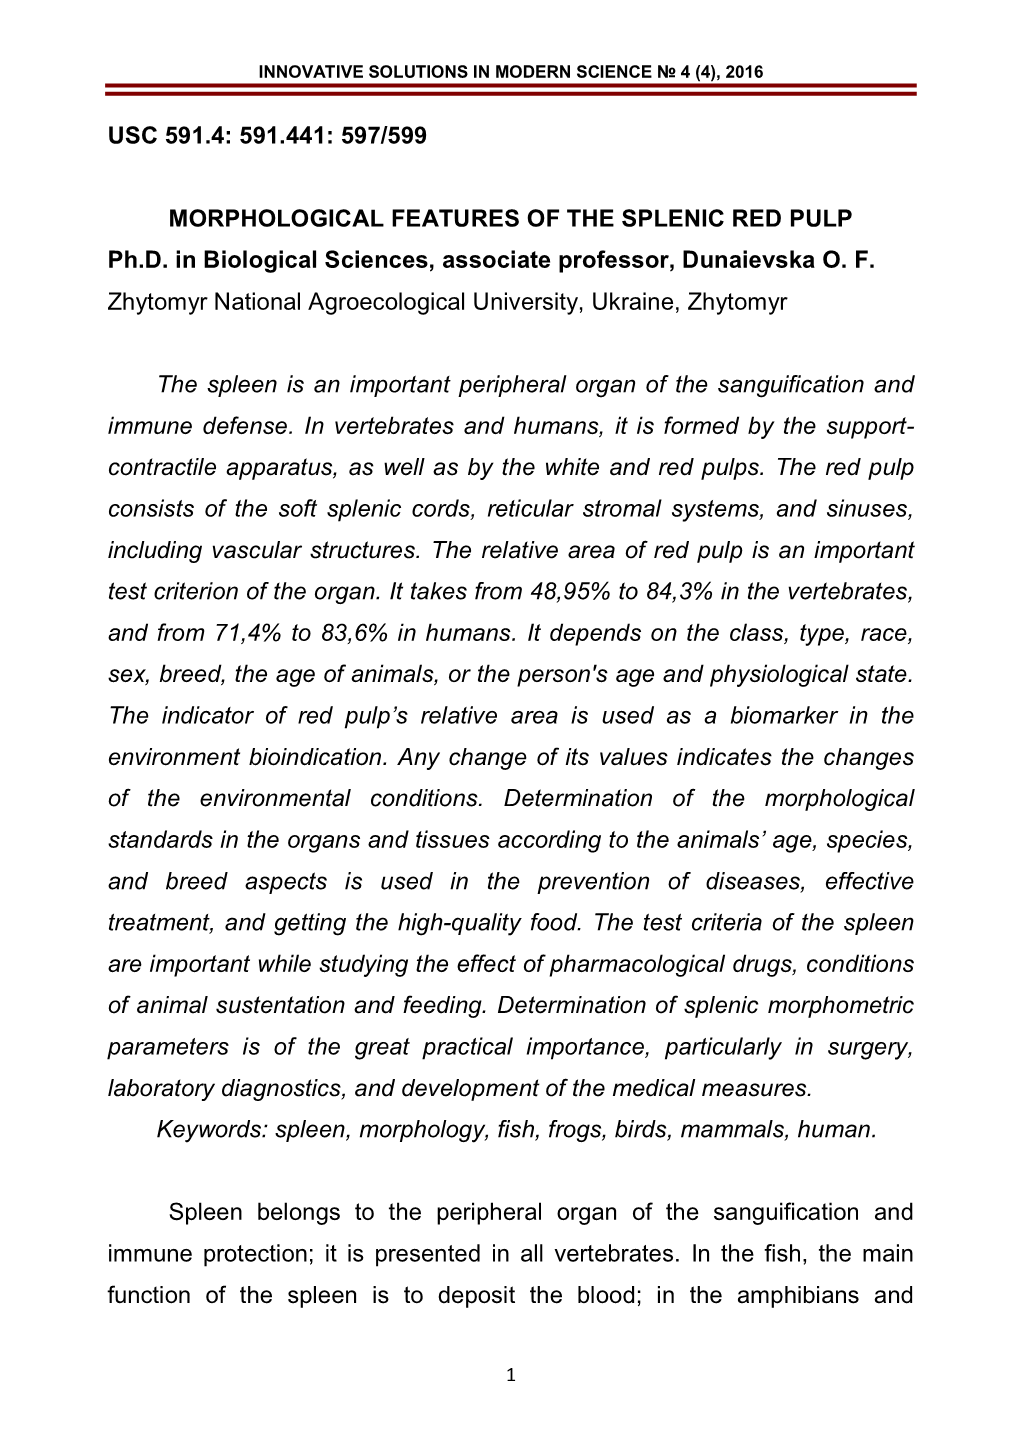 USC 591.4: 591.441: 597/599 MORPHOLOGICAL FEATURES of the SPLENIC RED PULP Ph.D. in Biological Sciences, Associate Professor, Du